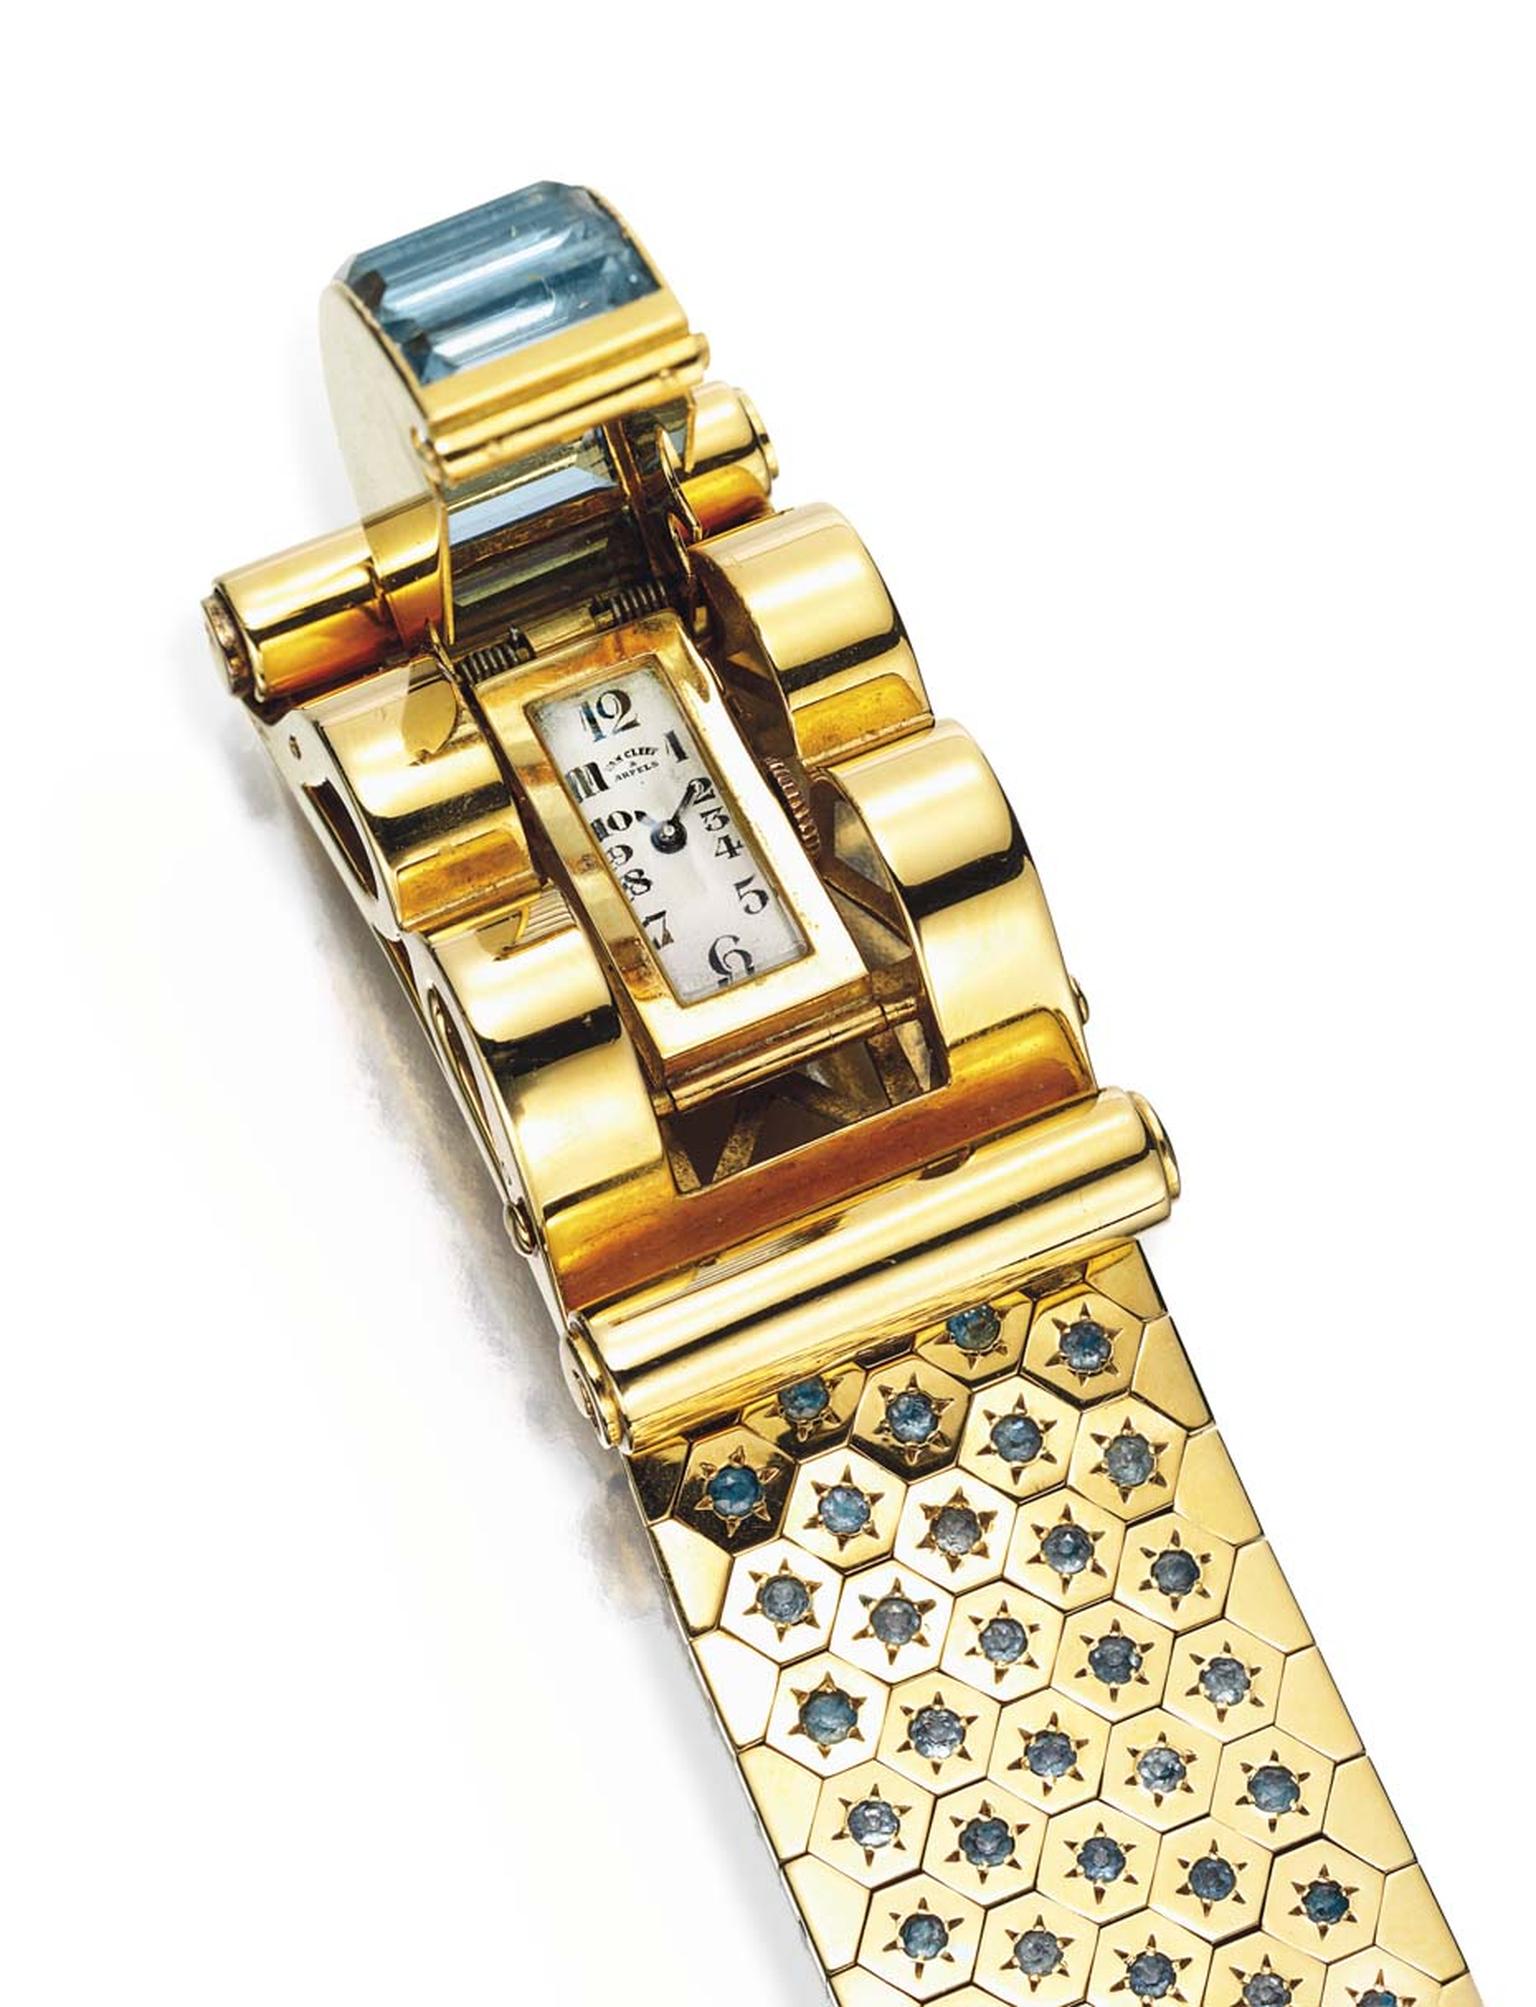 The Van Cleef & Arpels Ludo Hexagone bracelet watch features a watch dial hidden behind a swathe of aquamarines.